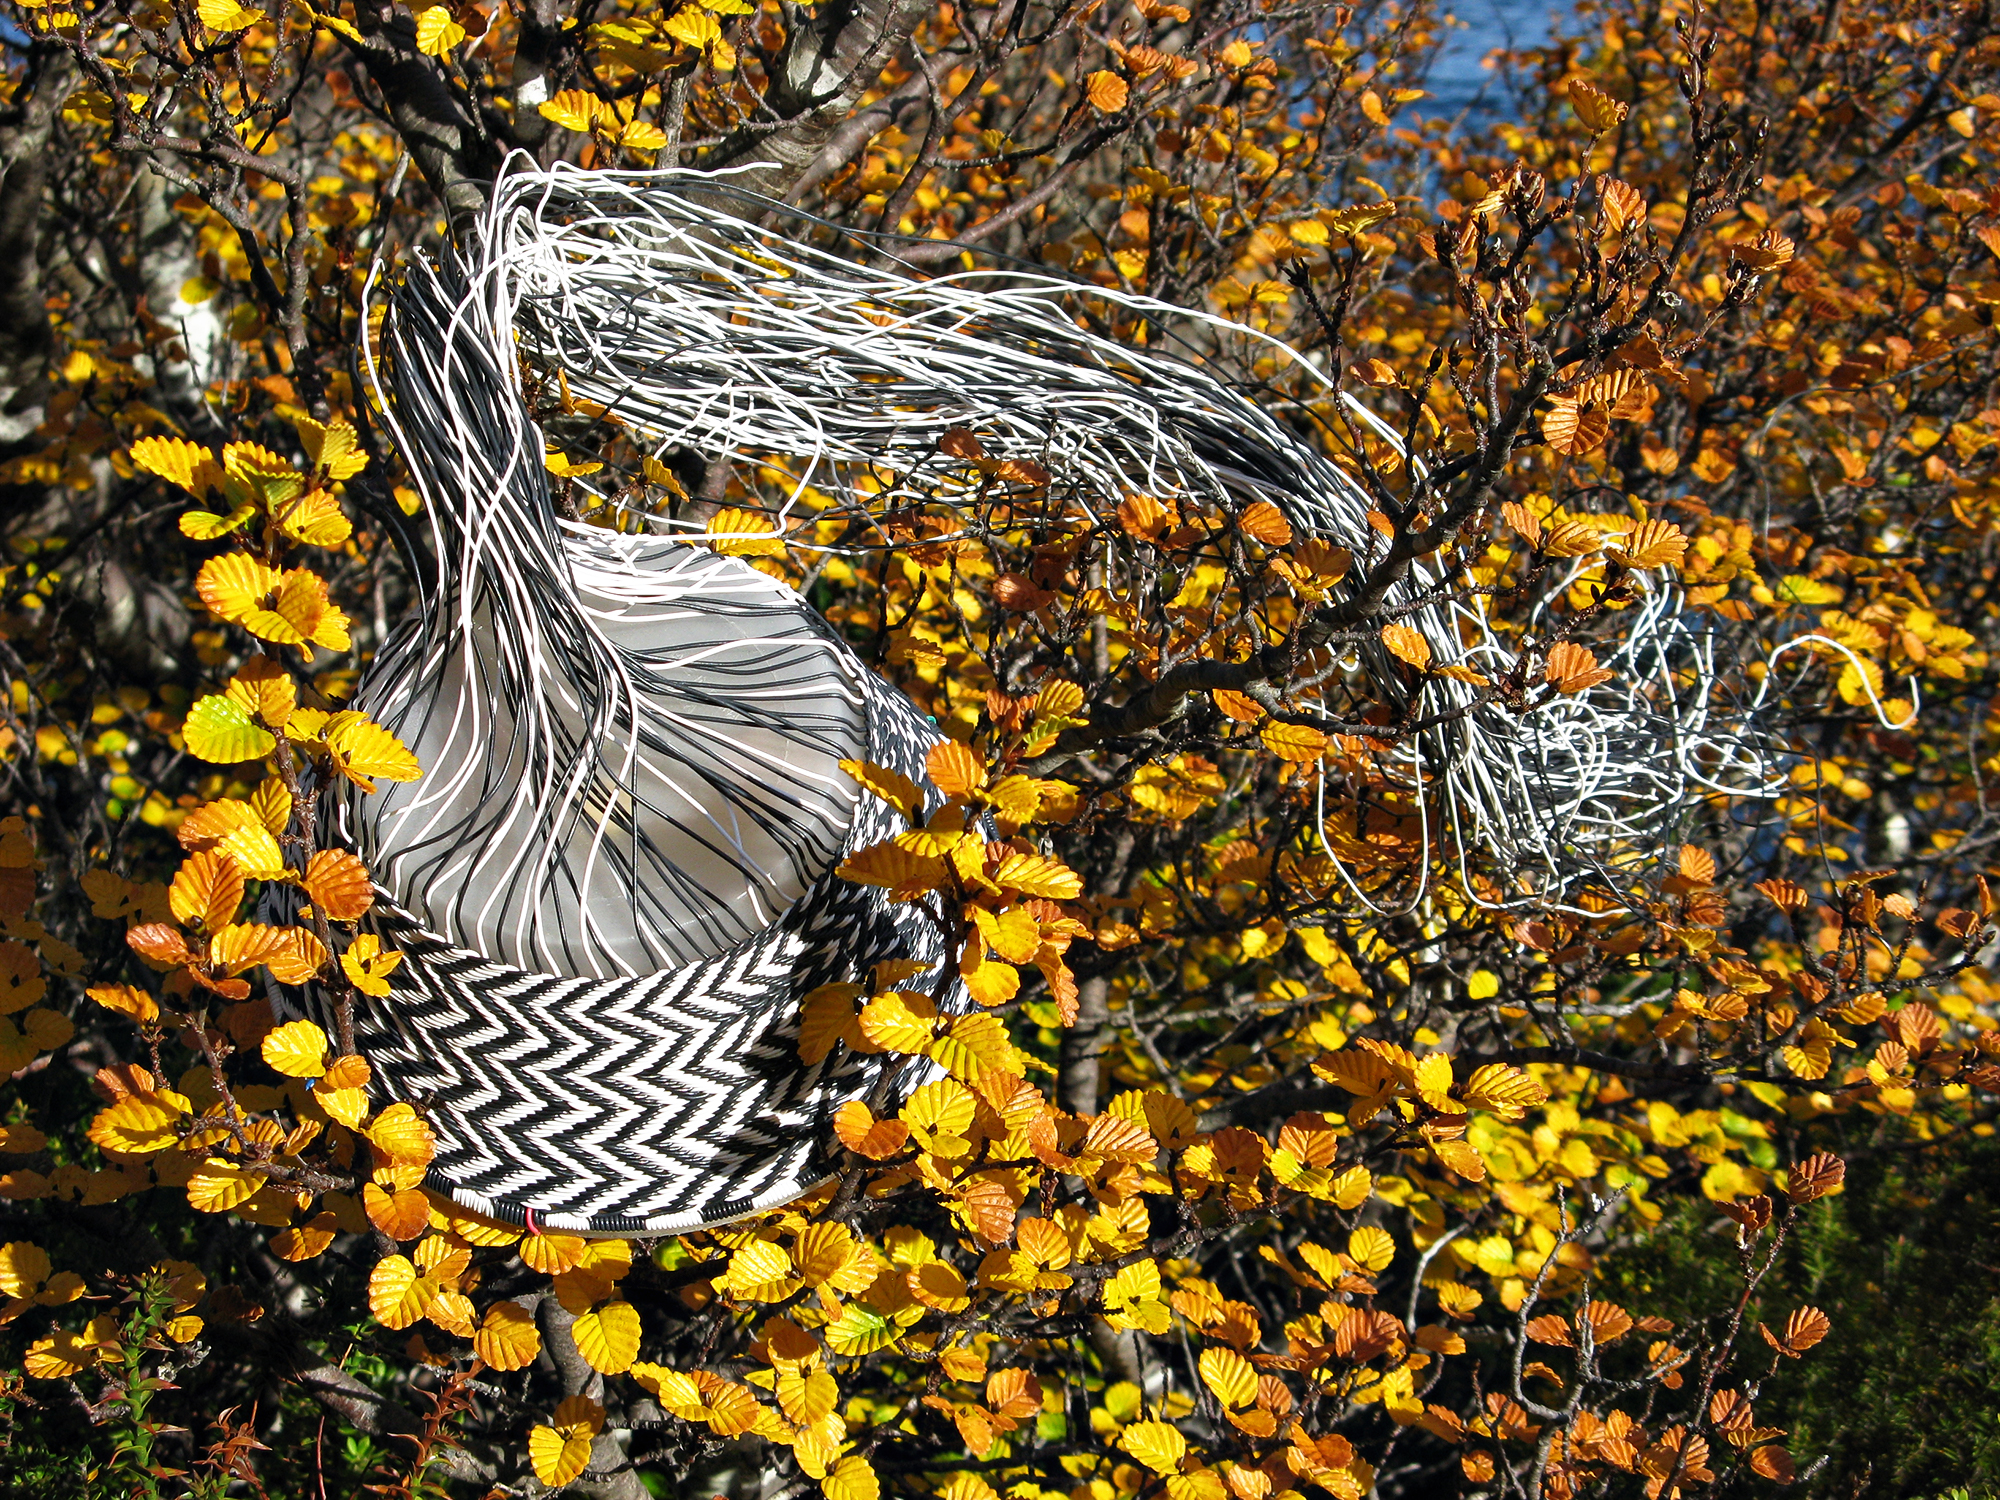 Black and white chevron wire basket in progress, nestled amongst the golden orange autumn foliage of Tasmania's deciduous beech.